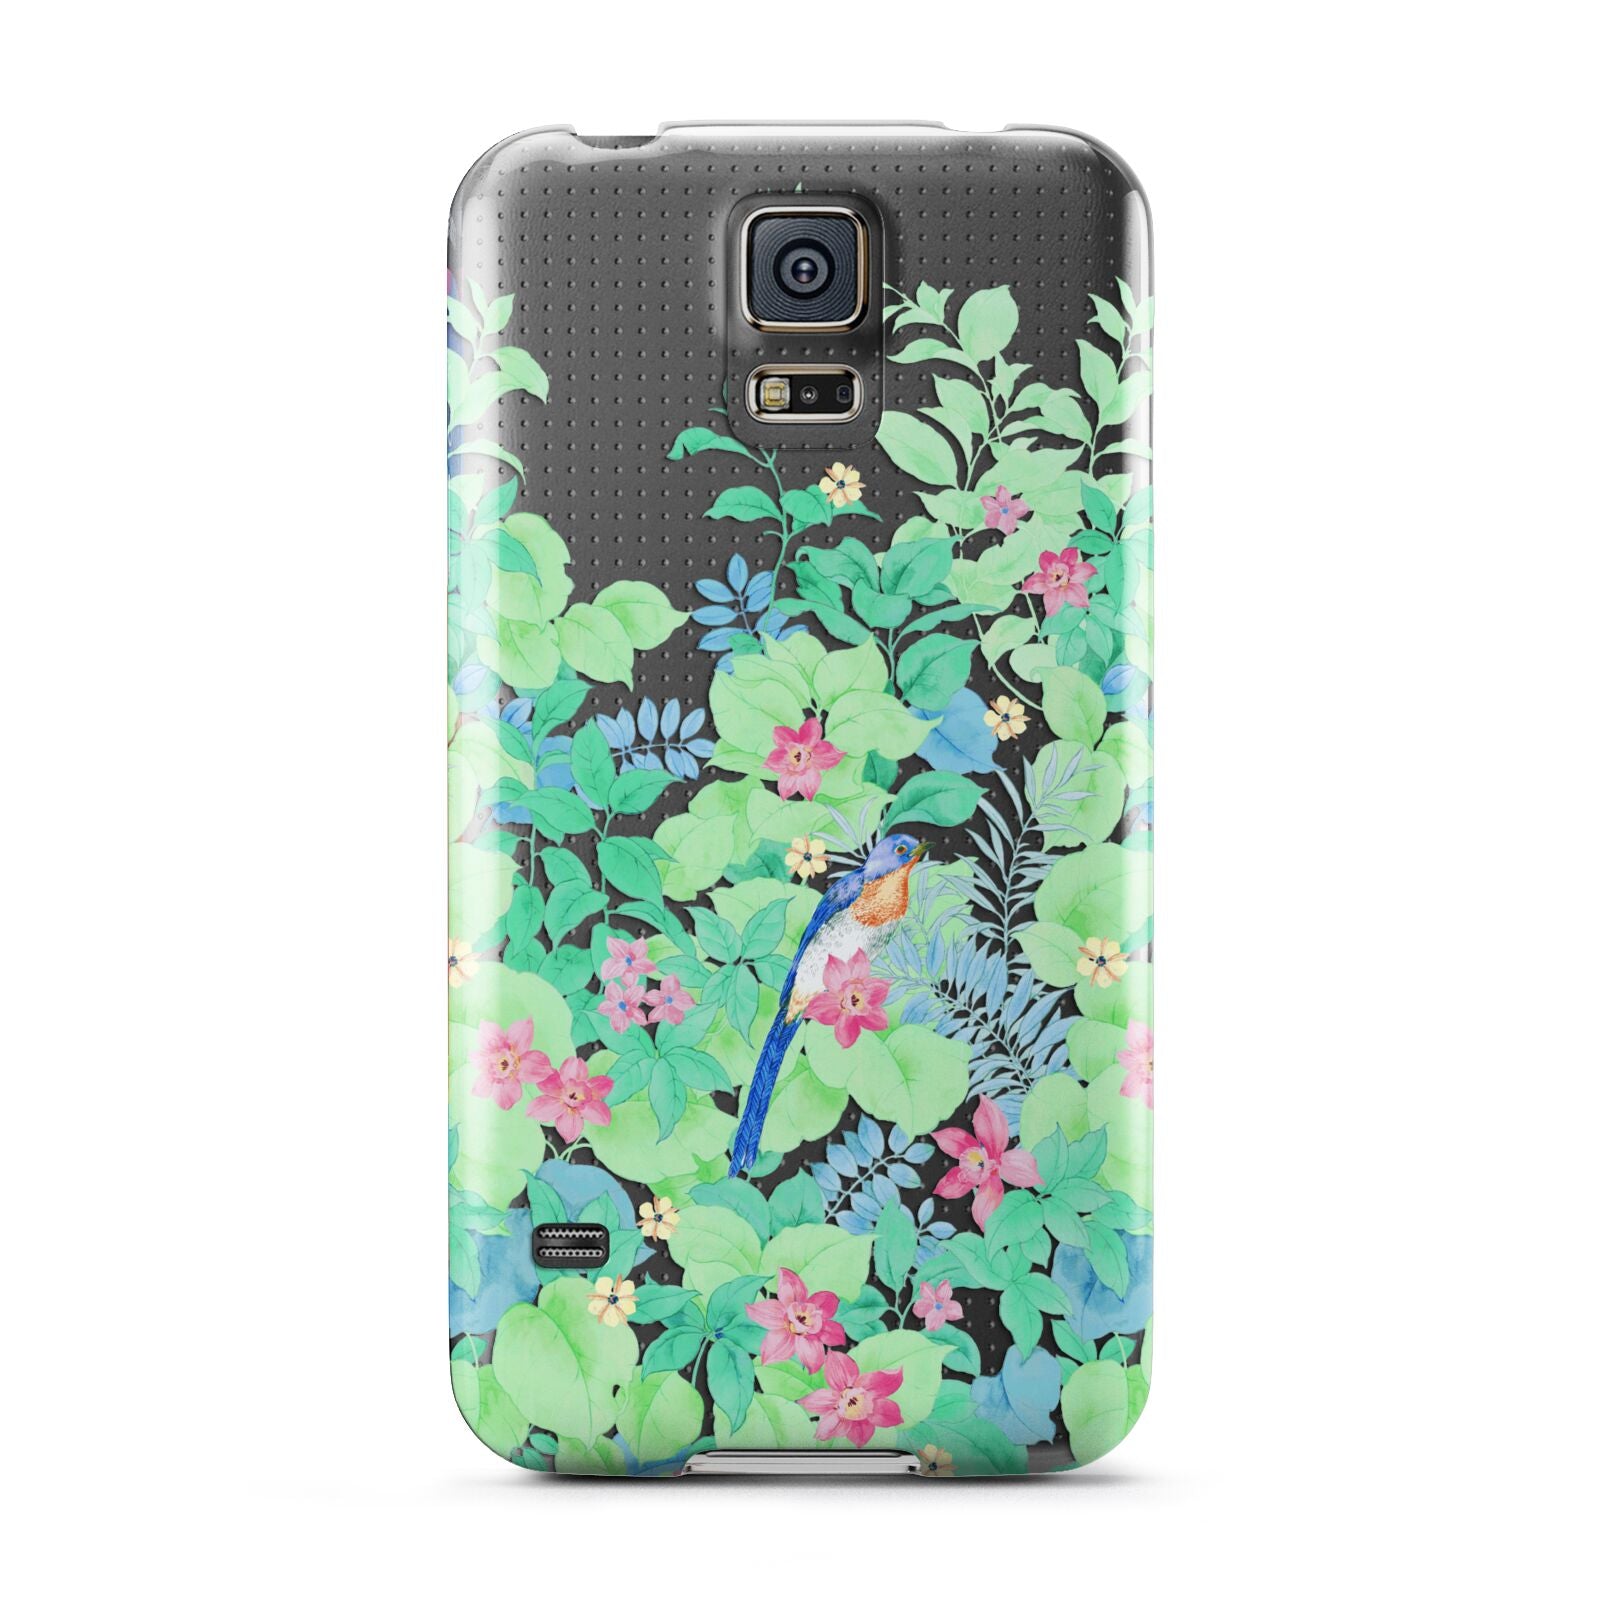 Watercolour Floral Samsung Galaxy S5 Case